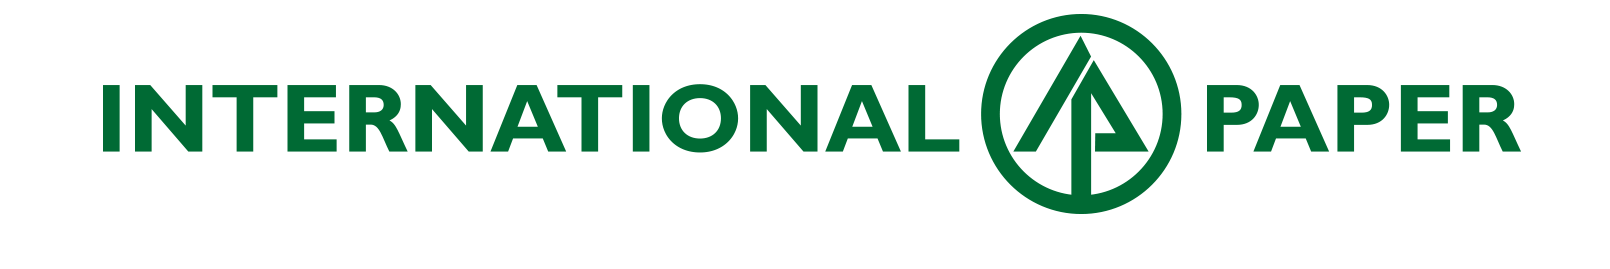 international paper logo vector green